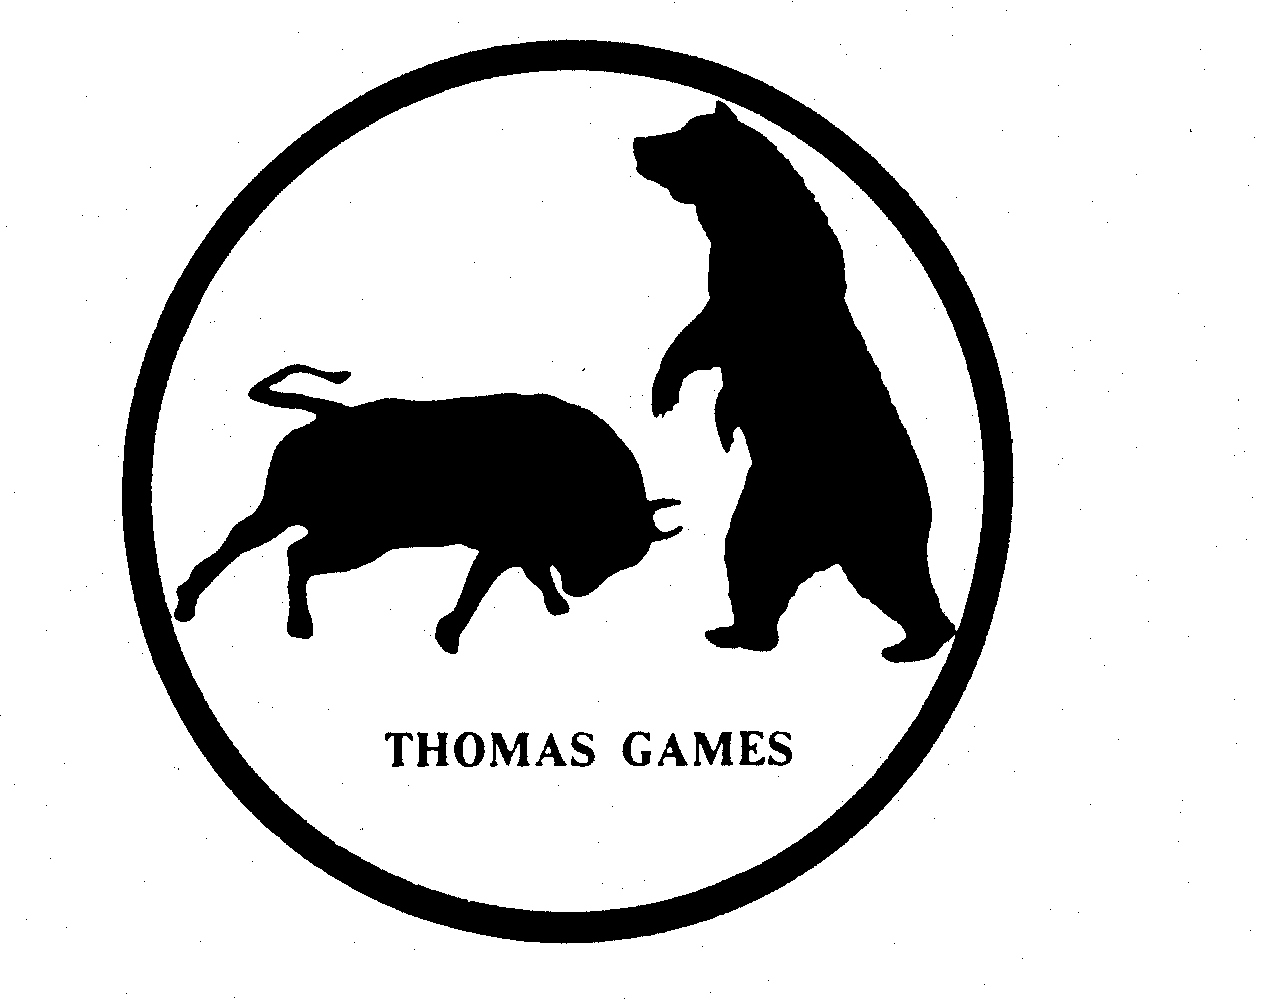  THOMAS GAMES